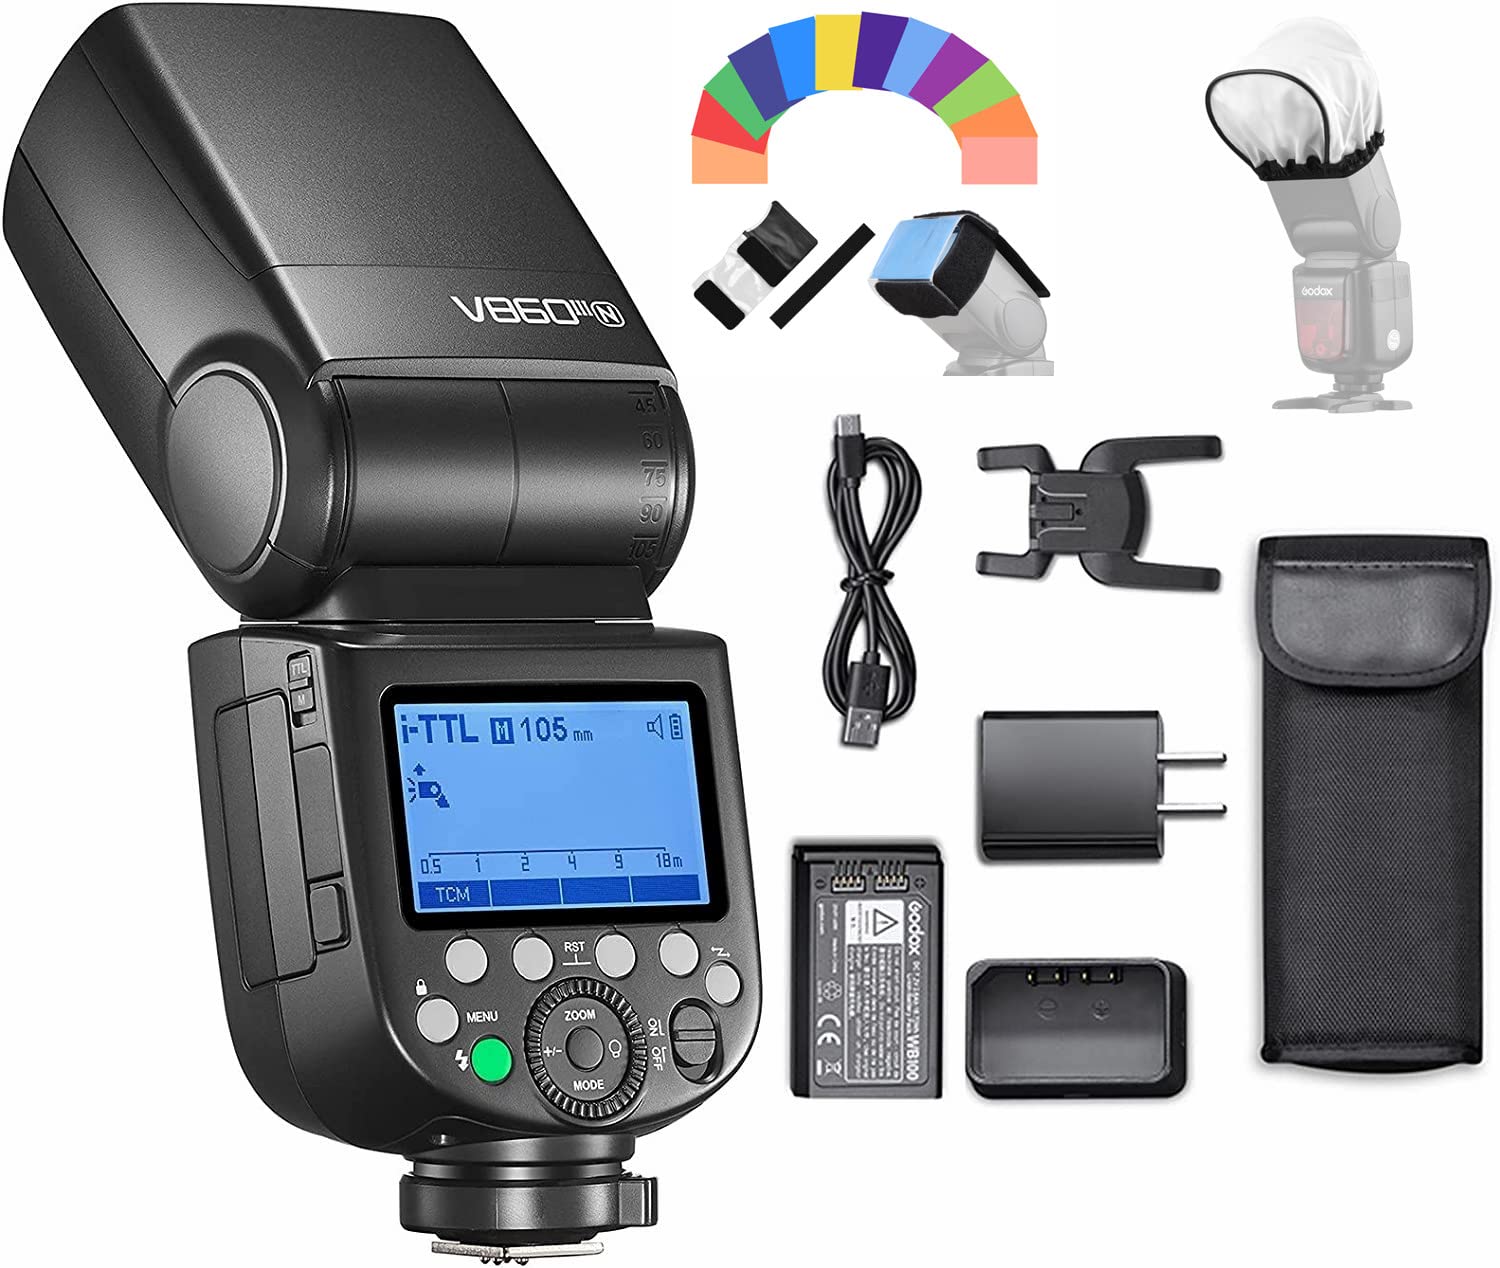 GODOX正規代理店GODOX V860III-N カメラフラッシュ 2.4G GN60 1/8000S TTL HSS 高速同期 Nikon D800 / D700 / D7100 / D7000 / D5200 / D5100 / D5000 / D300 / D300S / D3200カメラ適用 [並行輸入品]